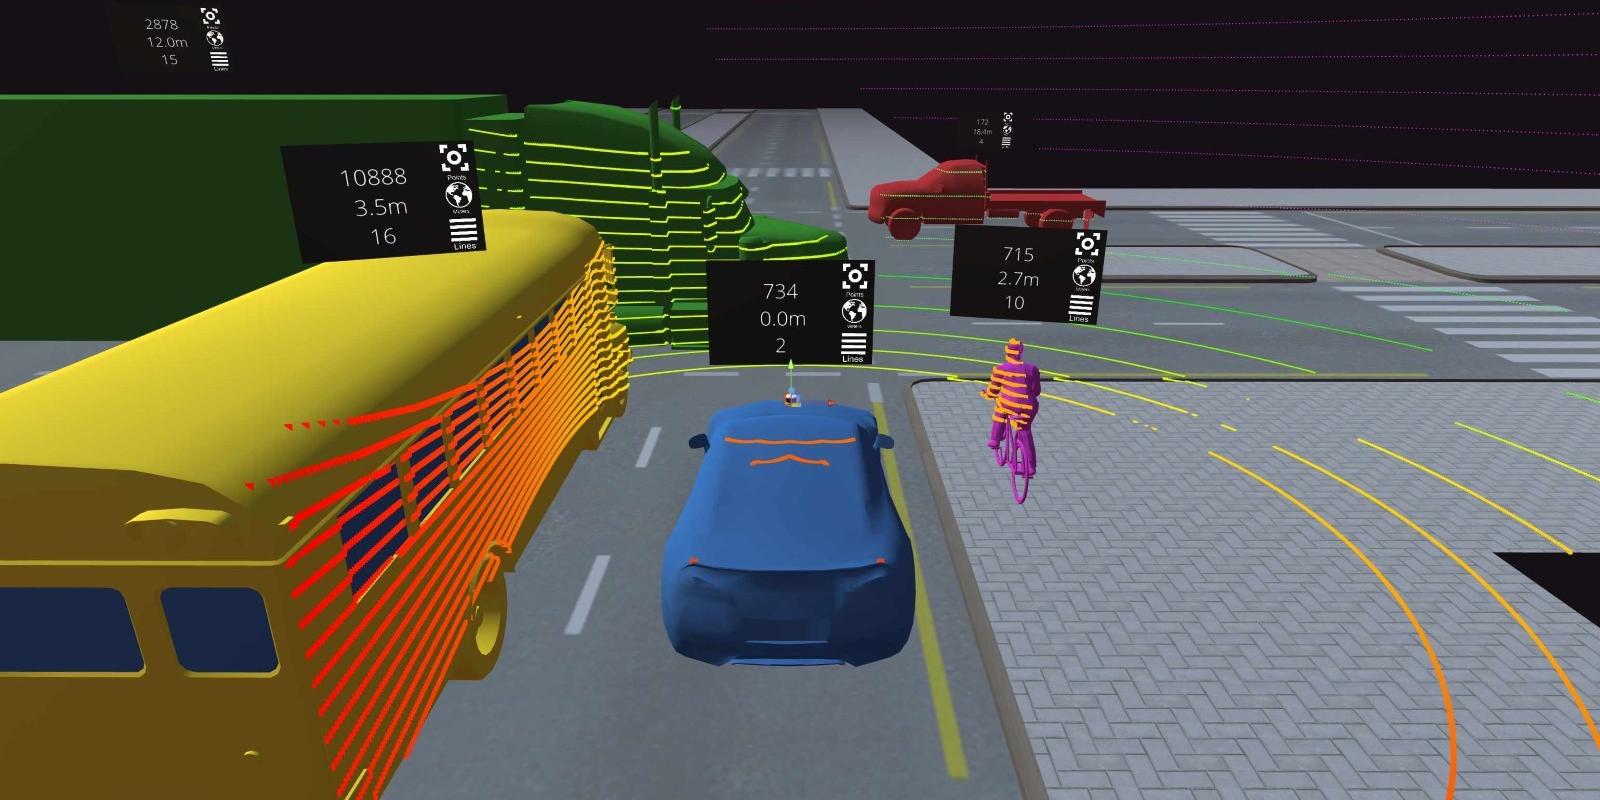 Vehicles in Lidar simulation